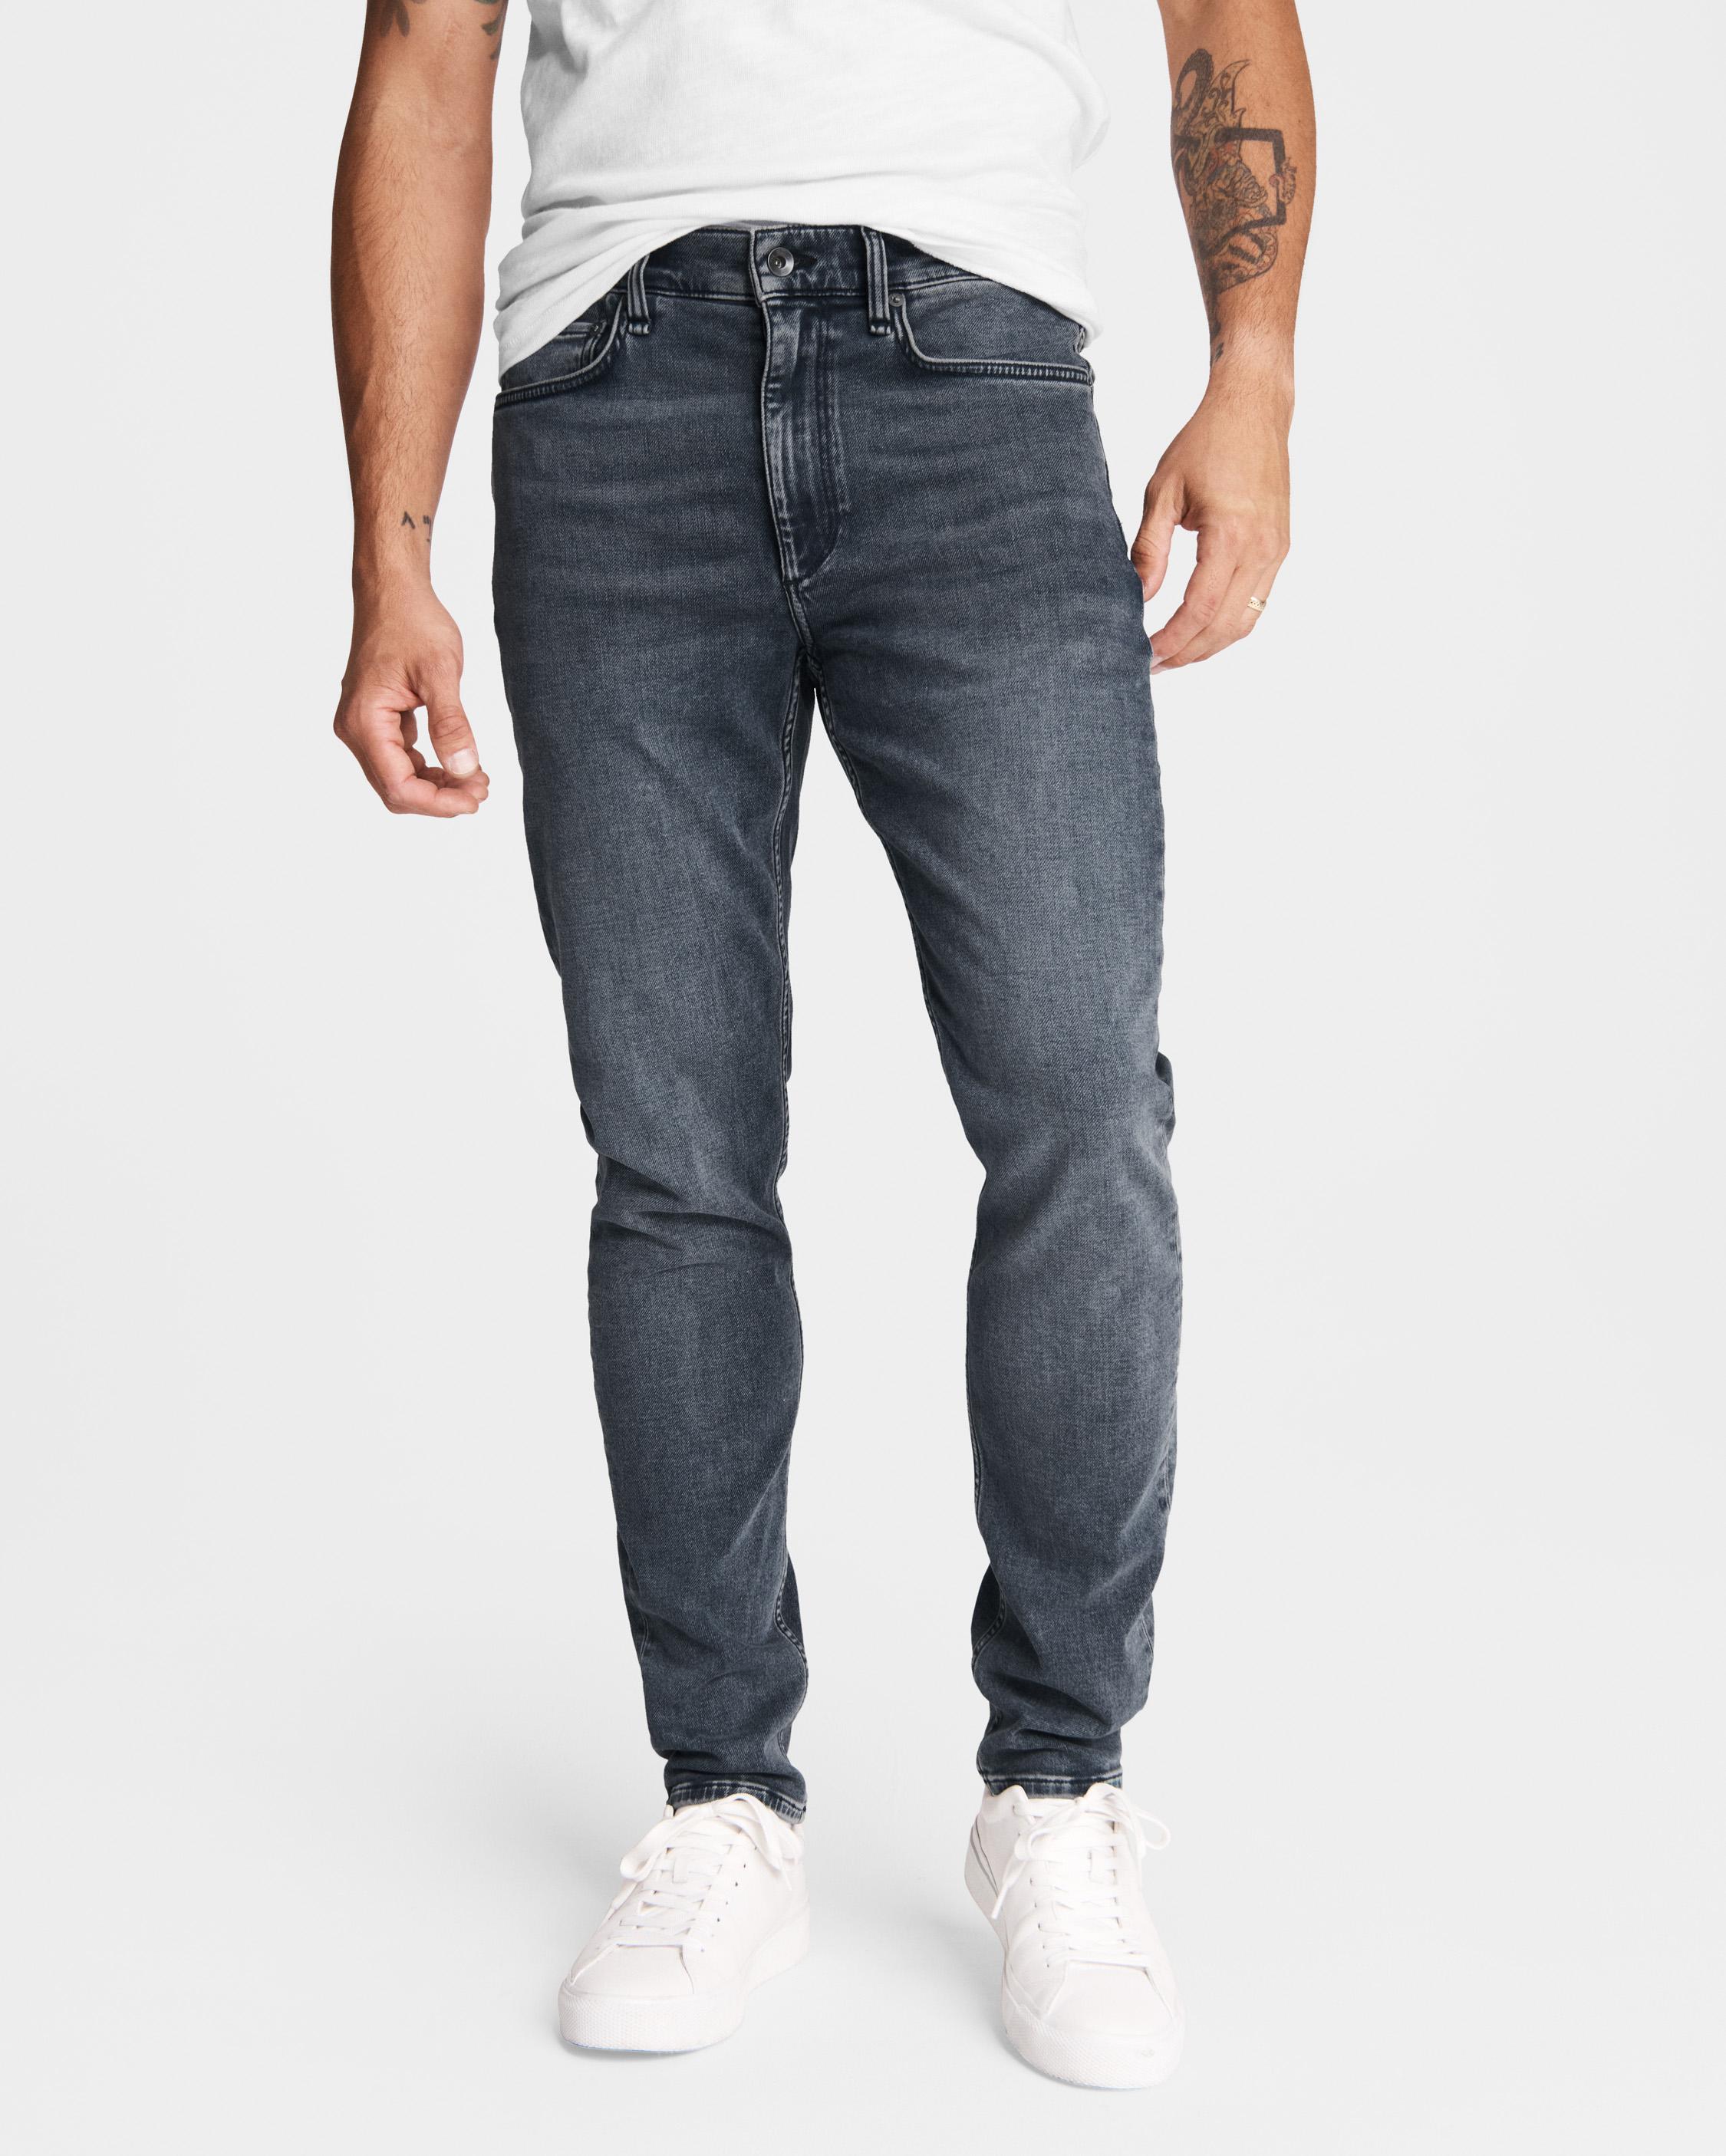 Fit 2 Apparel Jeans | rag & bone